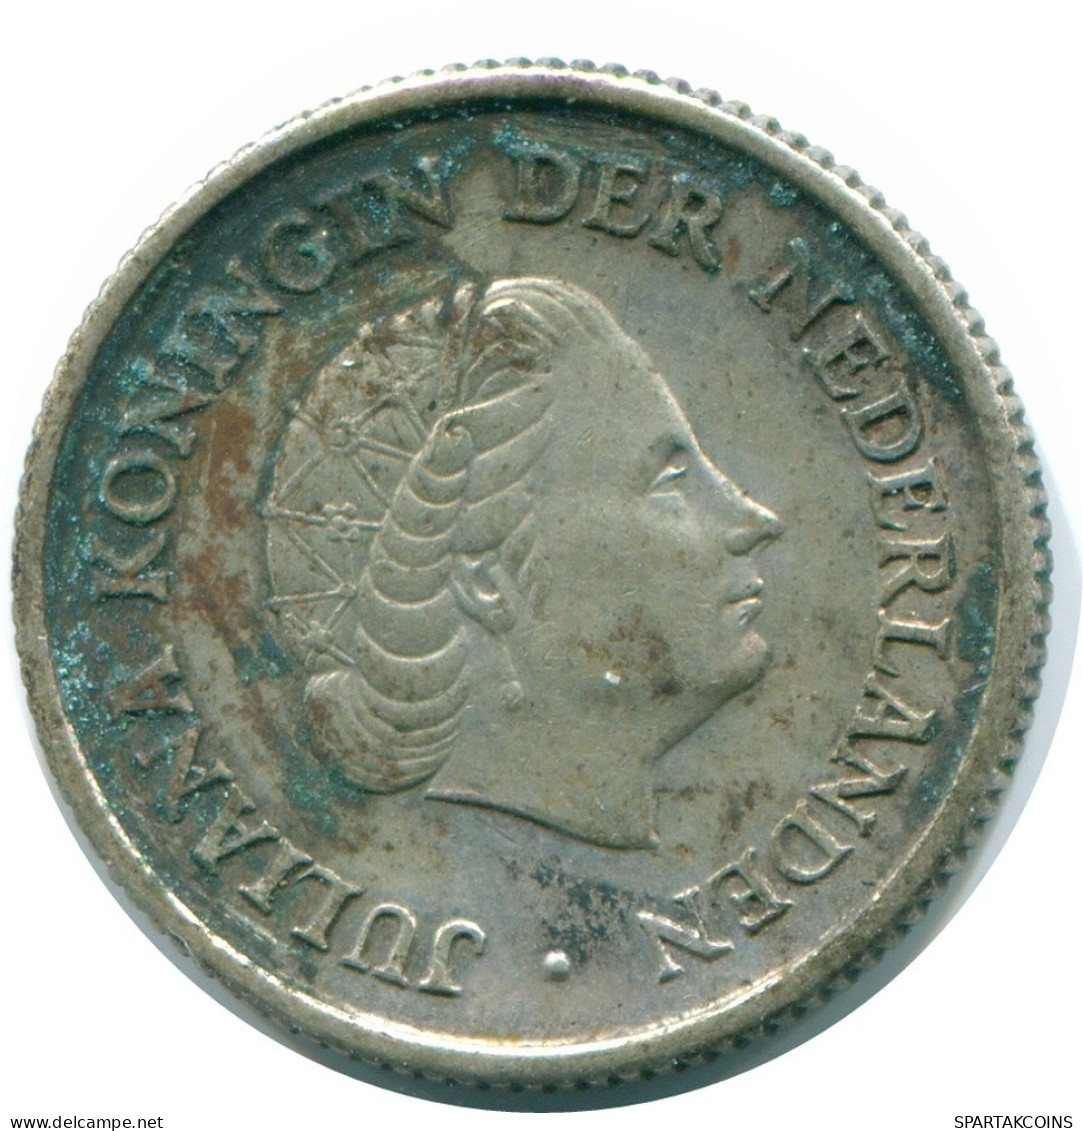 1/4 GULDEN 1957 NETHERLANDS ANTILLES SILVER Colonial Coin #NL10993.4.U.A - Netherlands Antilles